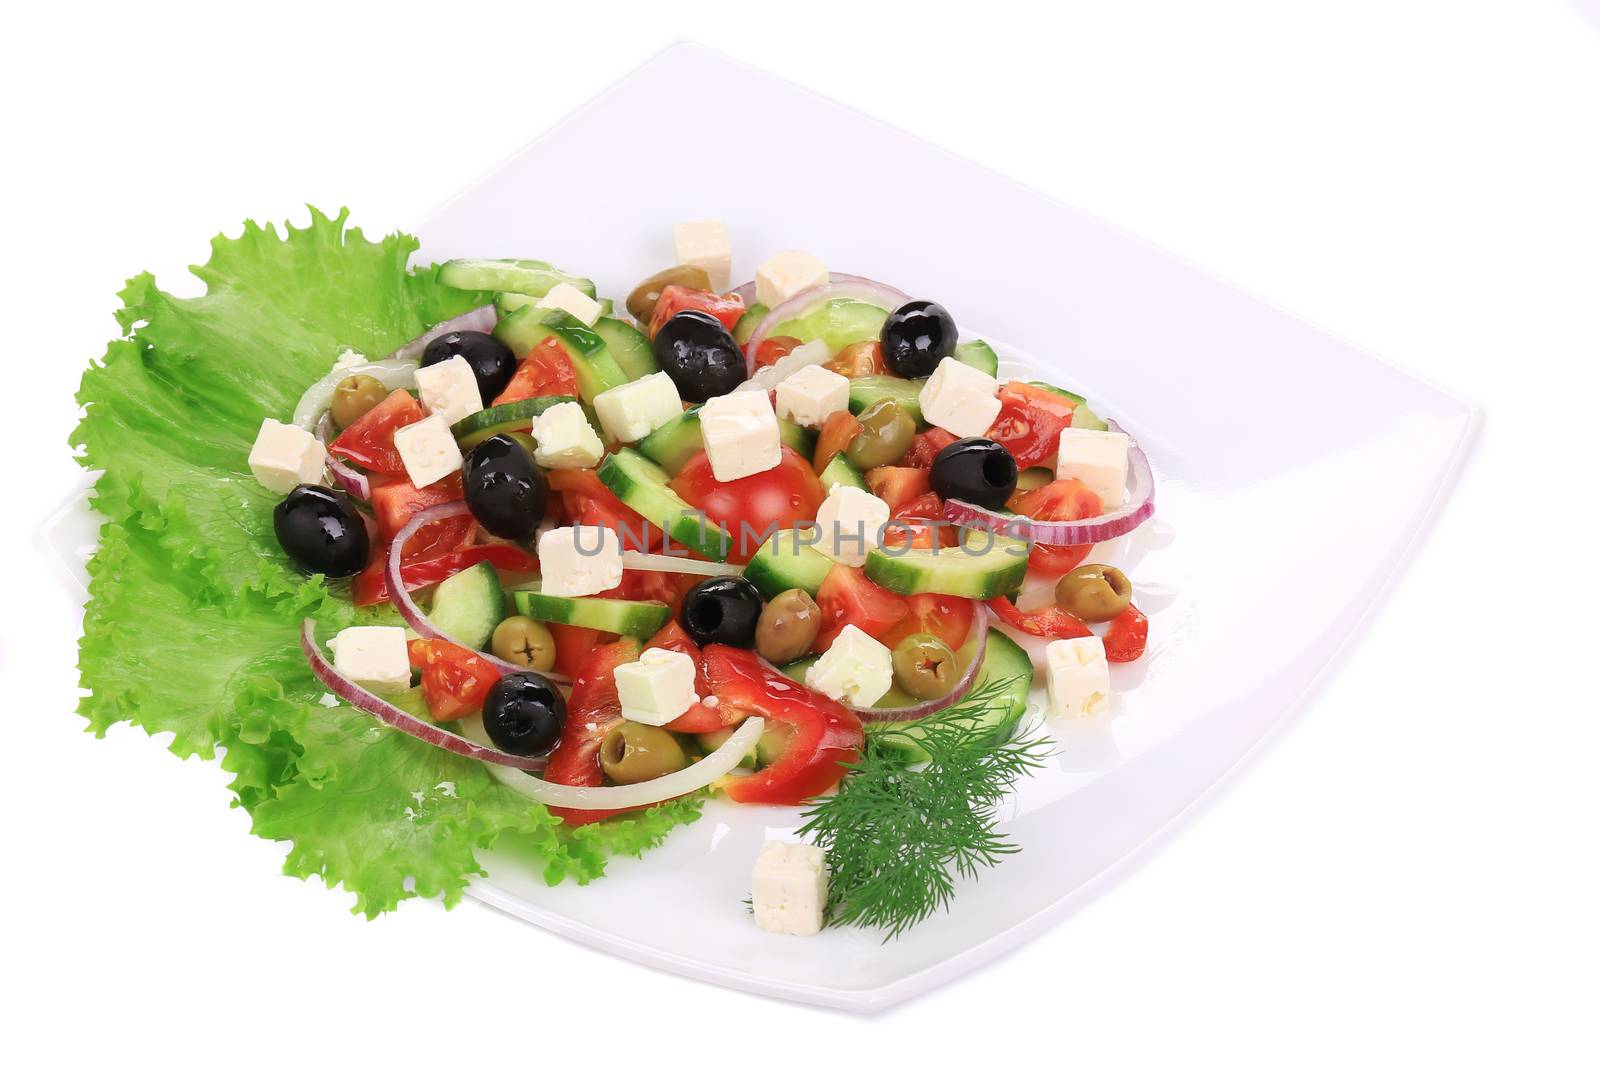 Greek salad. by indigolotos